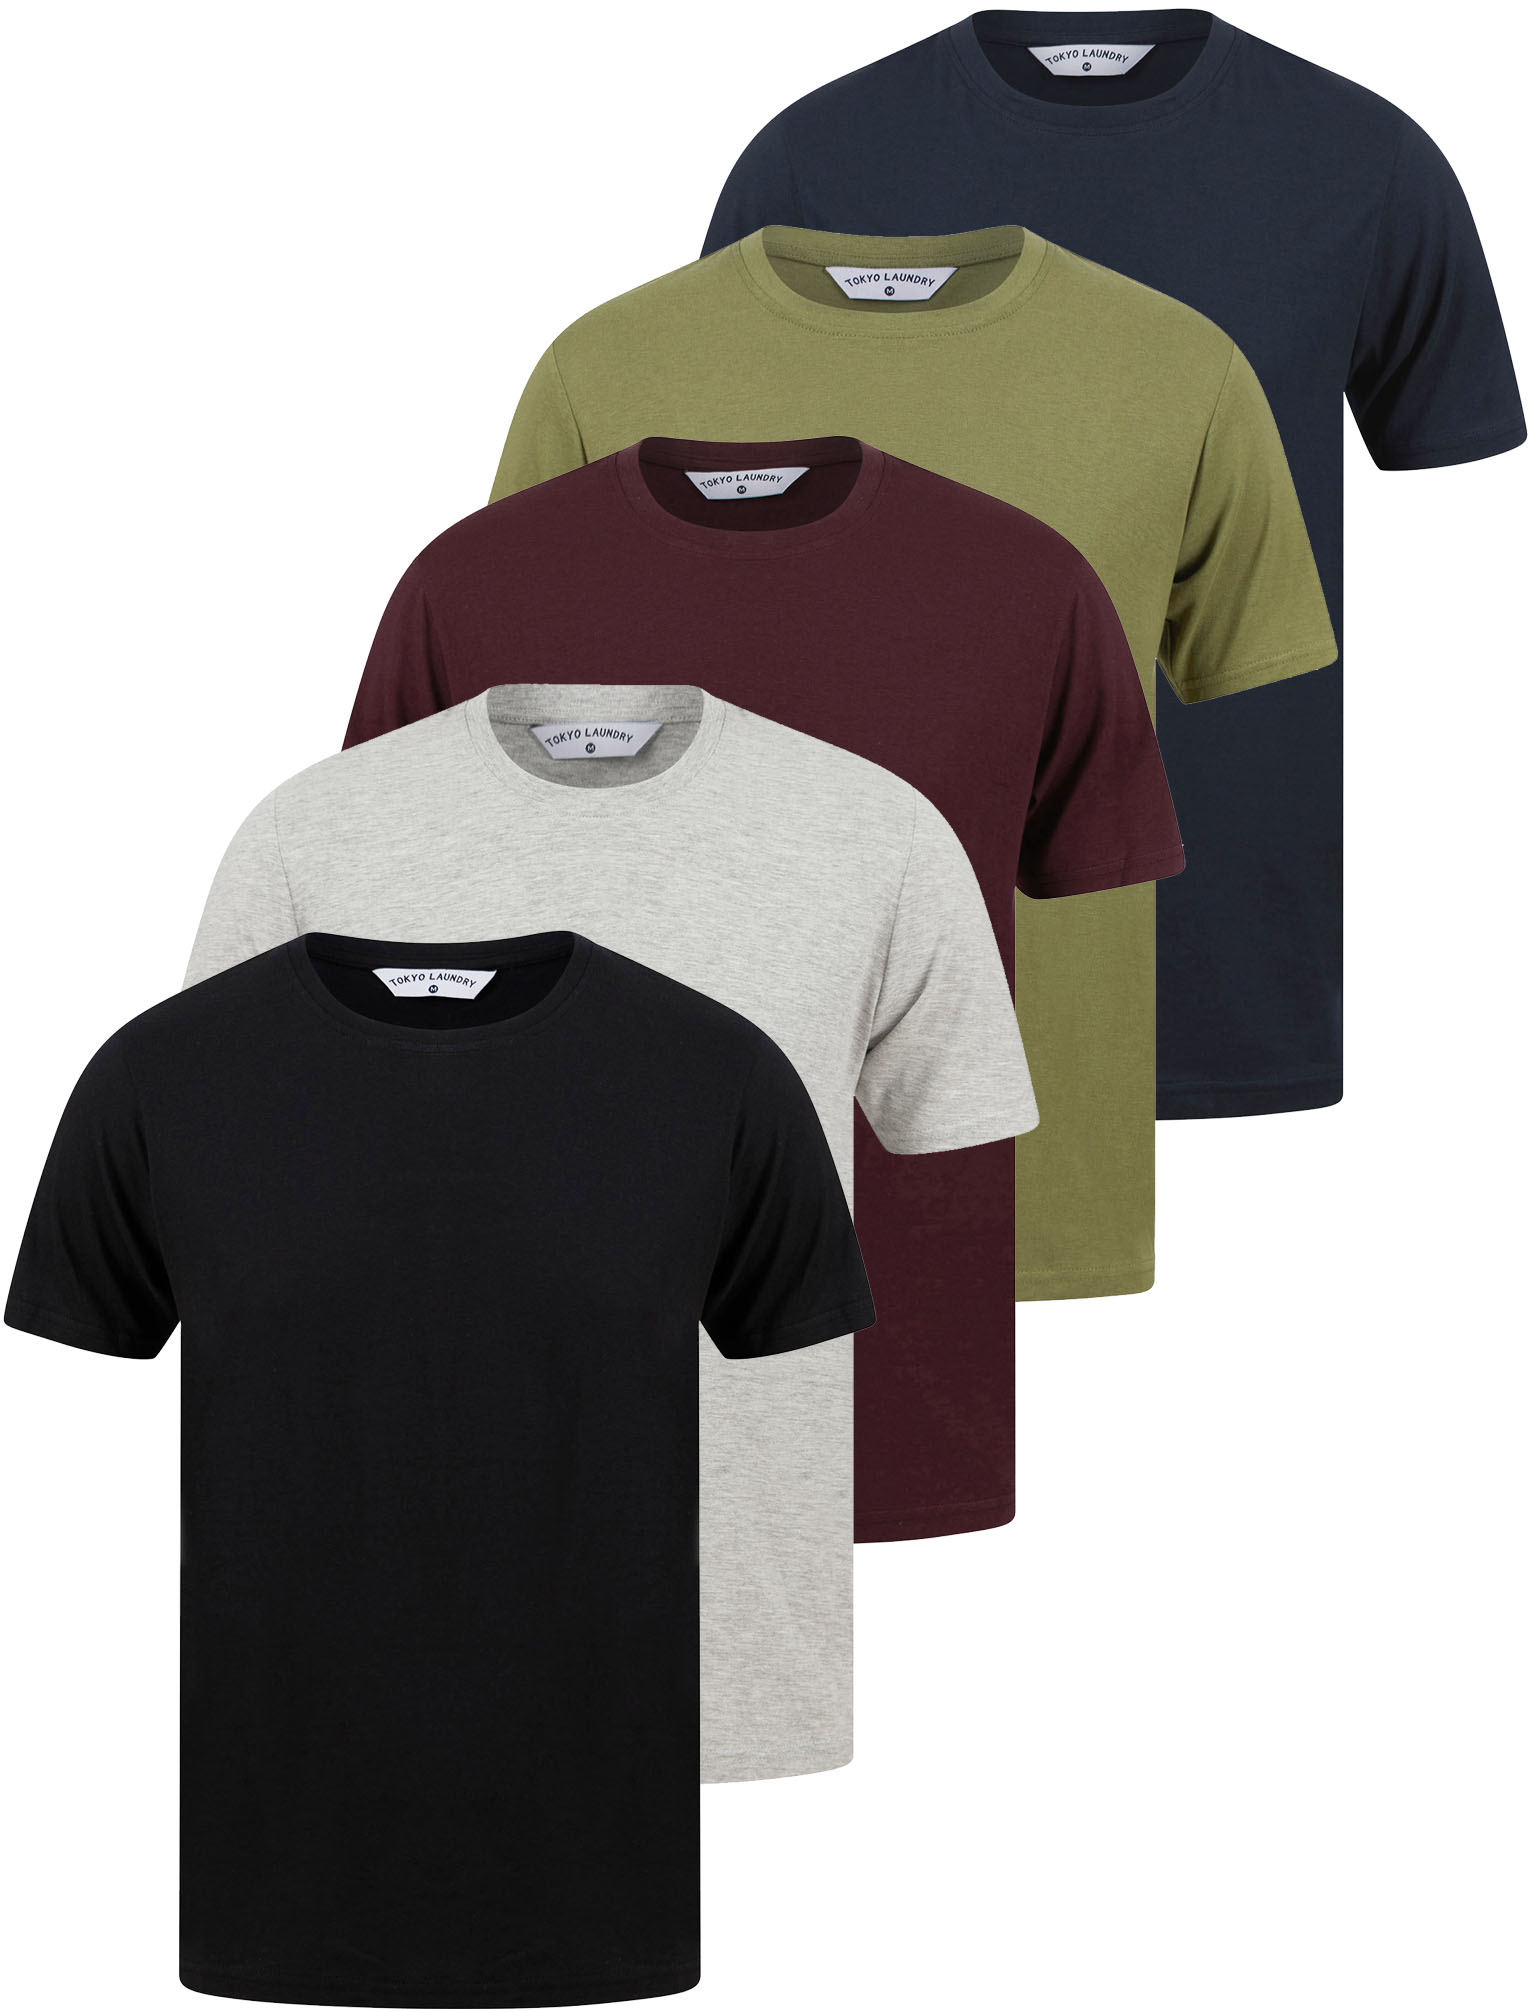 Tokyo Laundry Men's T-Shirts Multi Pack of 5 Basic Plain Top Set 100% ...